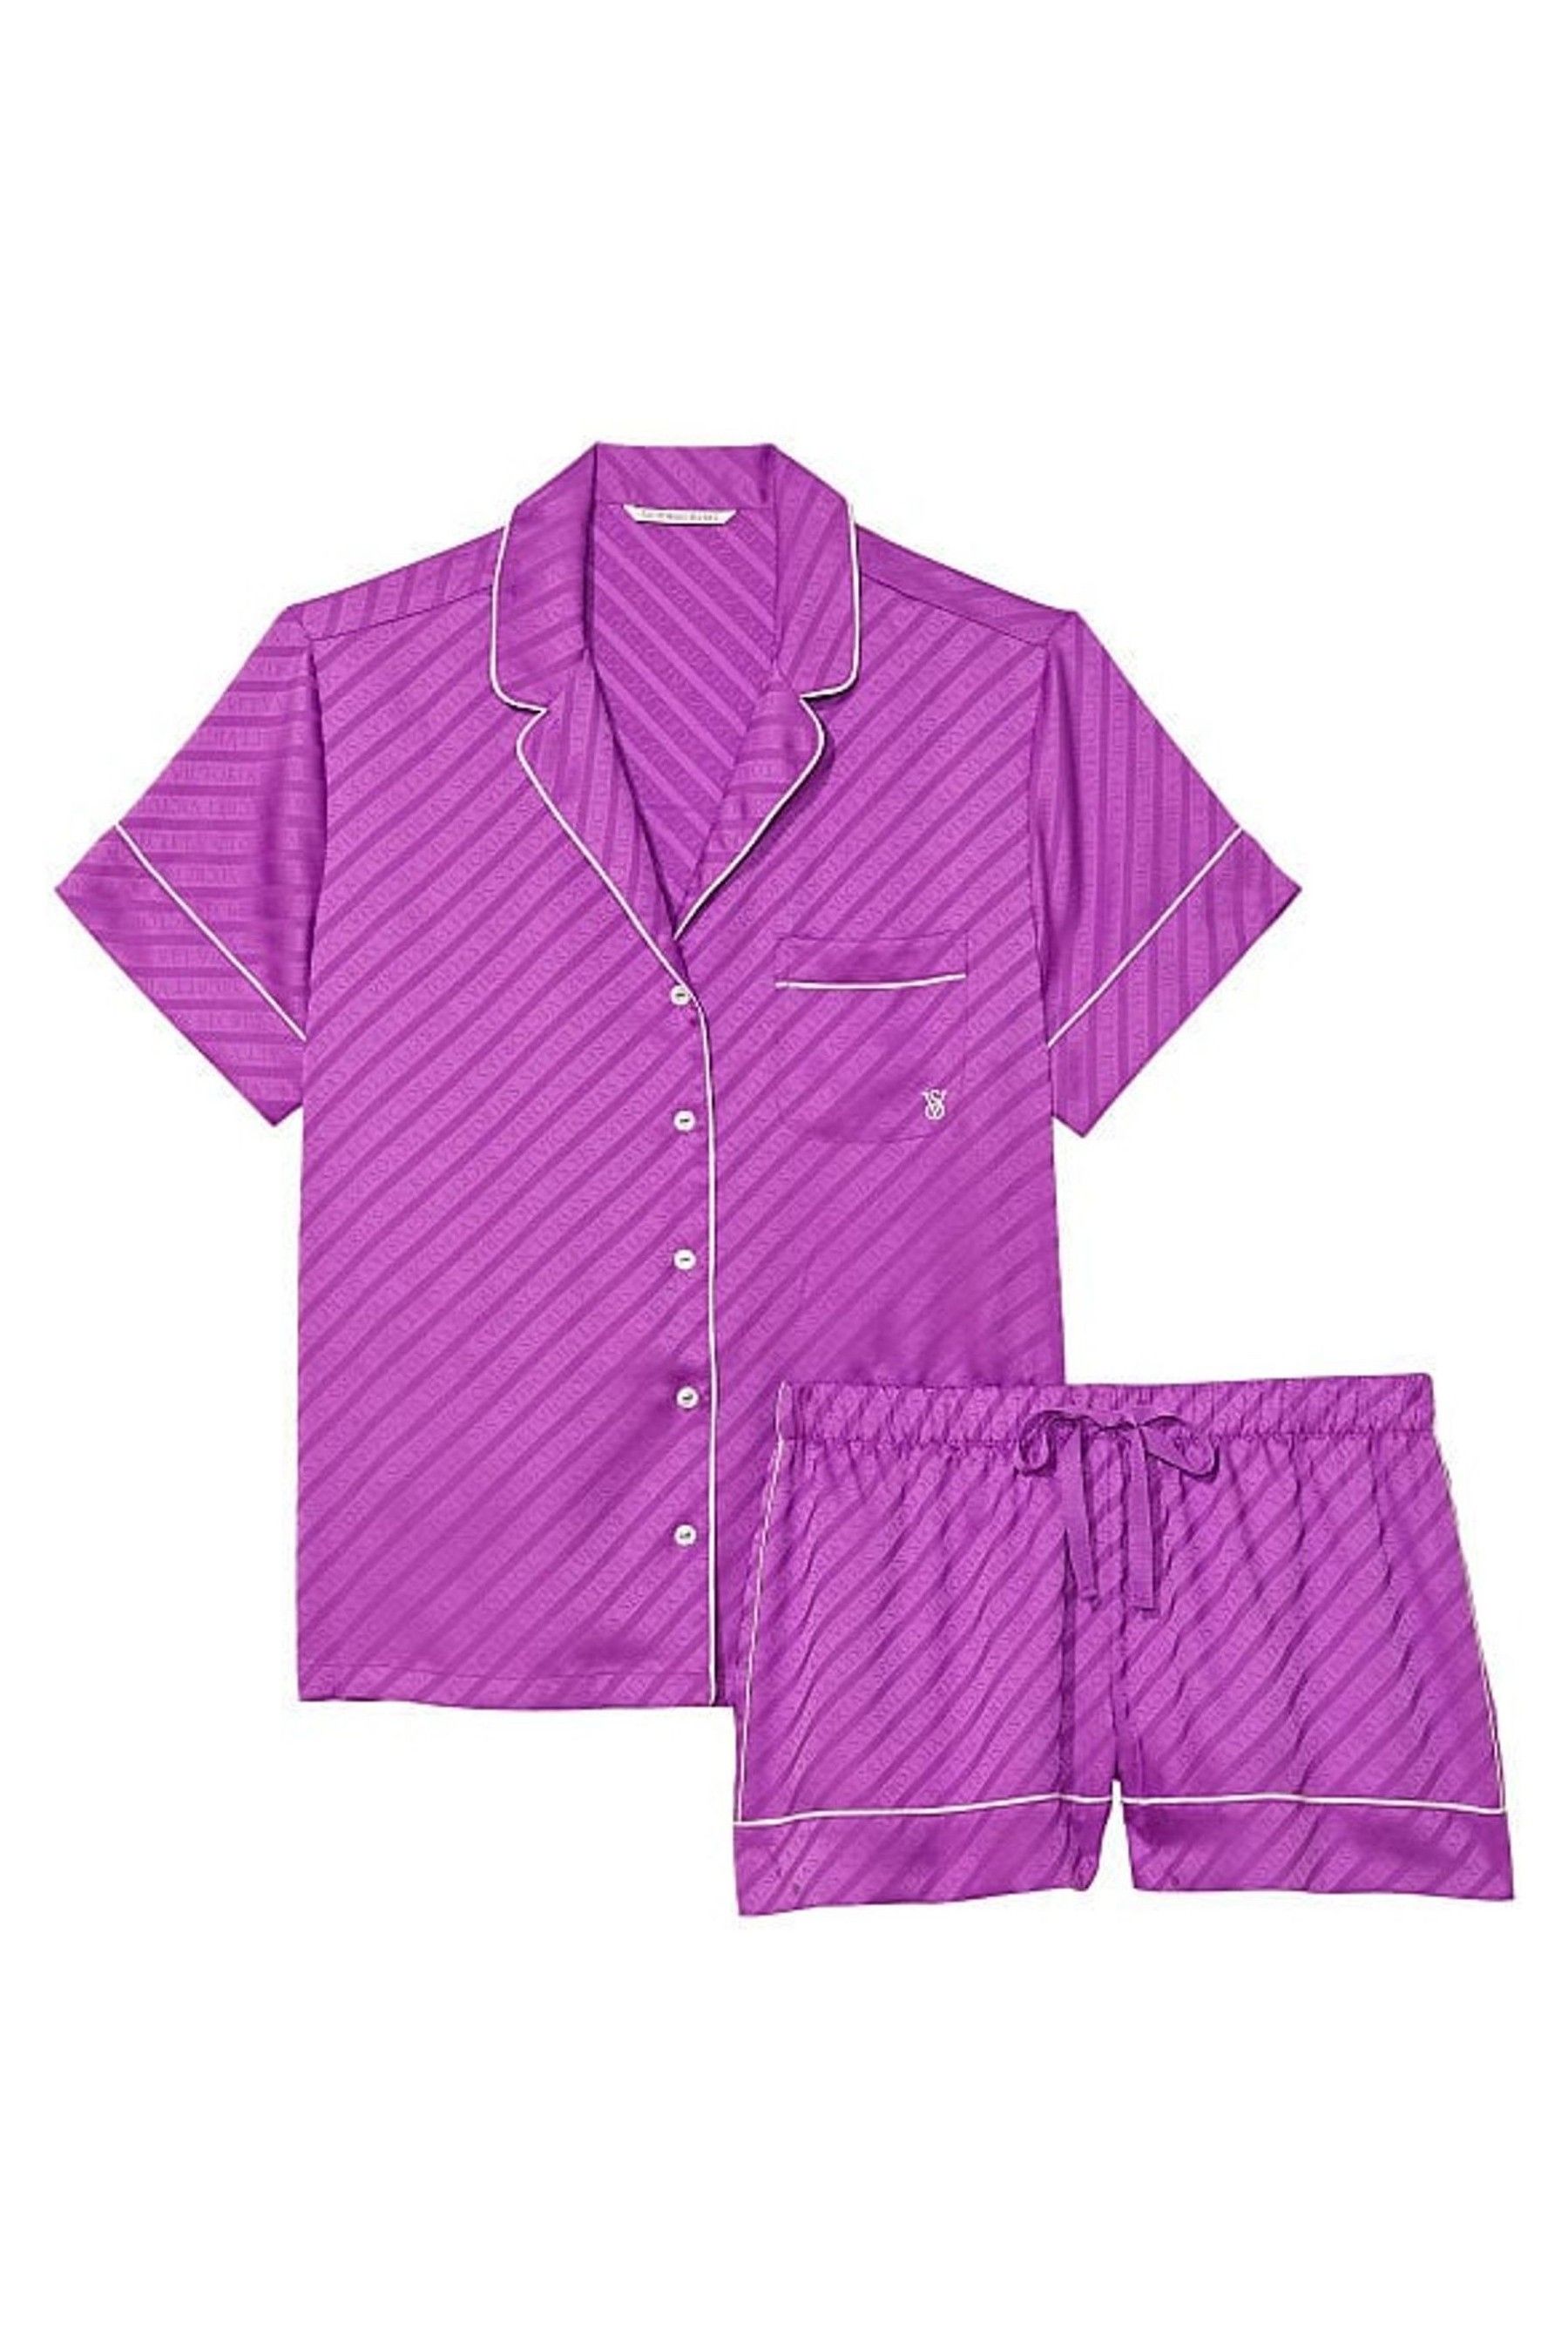 Buy Victoria's Secret Gum Drop Purple Satin Short Pyjamas1 from the ...